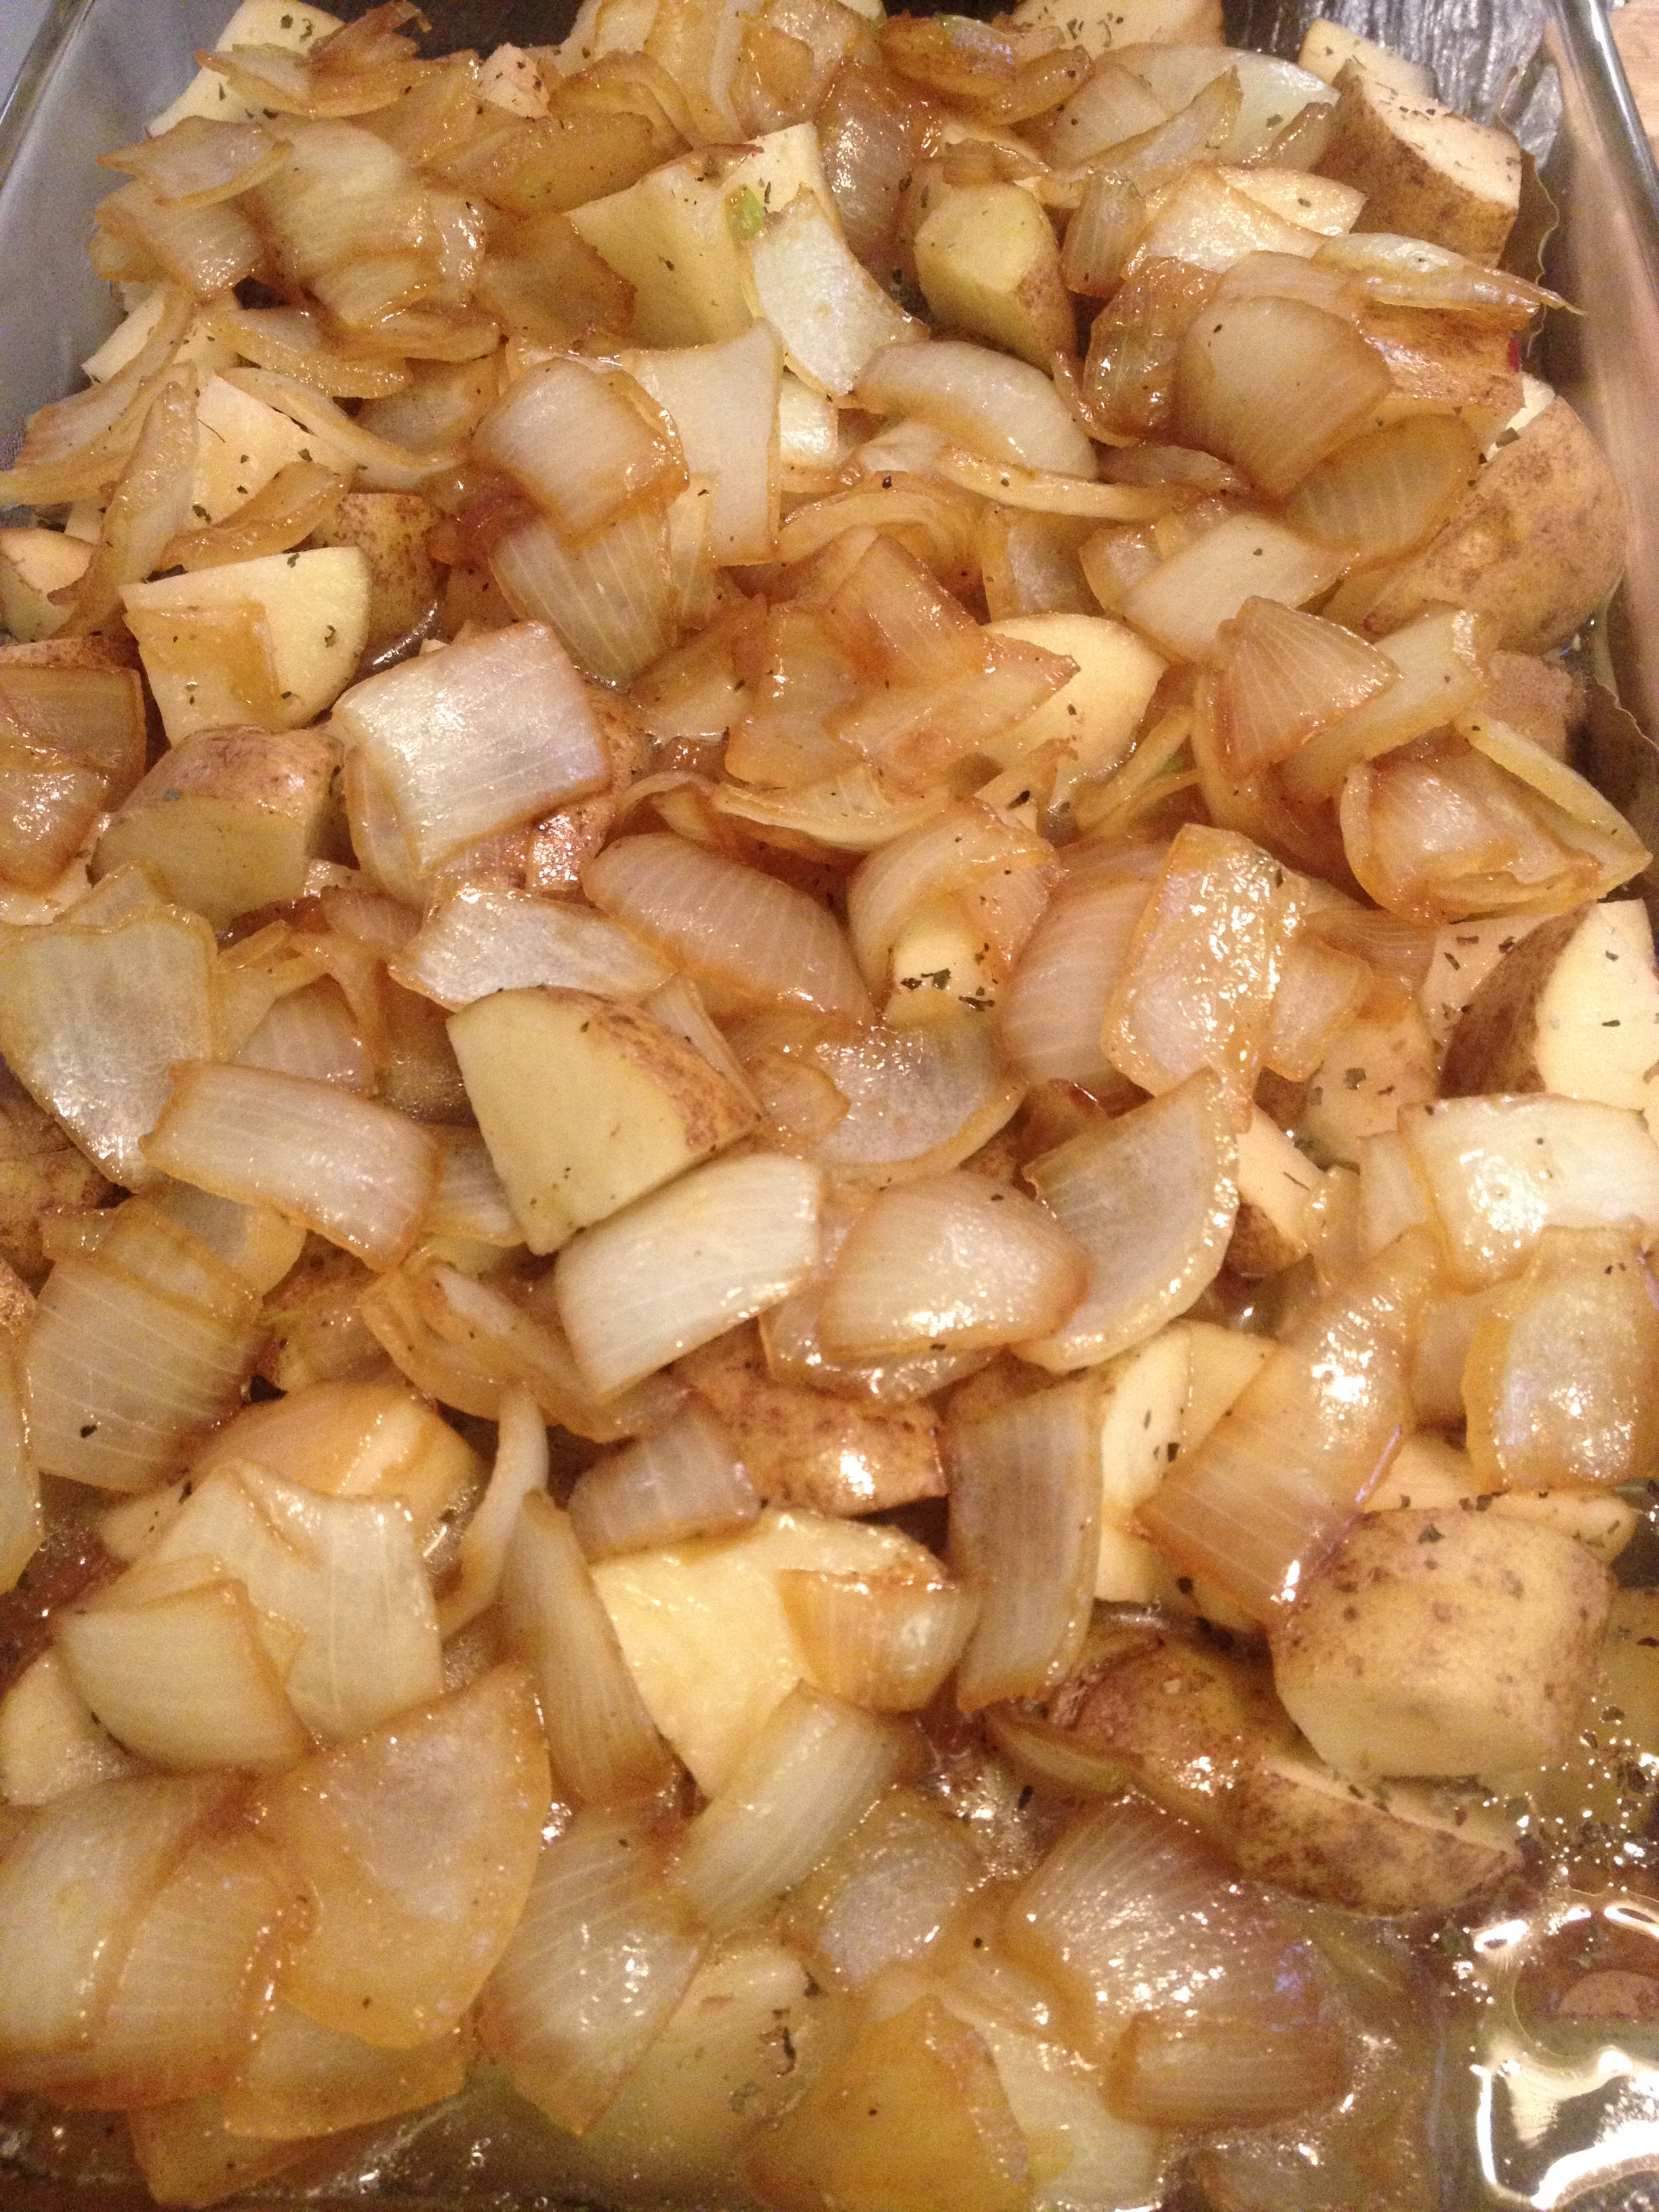 adding the onion into the potatoes